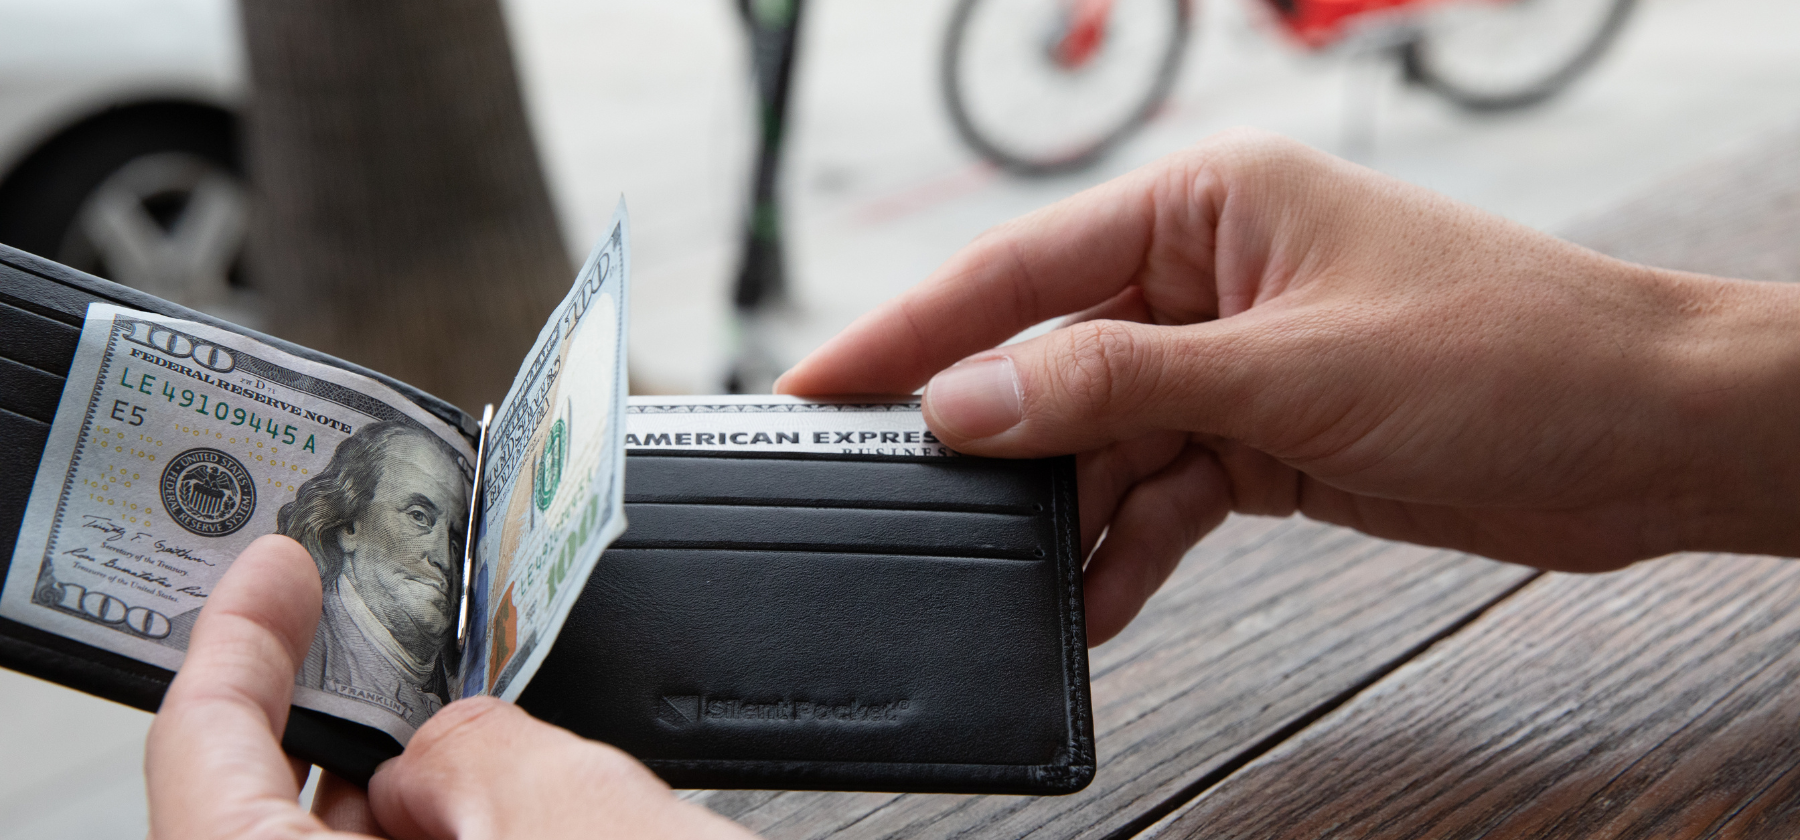 Silent Pocket Black Leather RFID Blocking Money Clip Bi-Fold Wallet